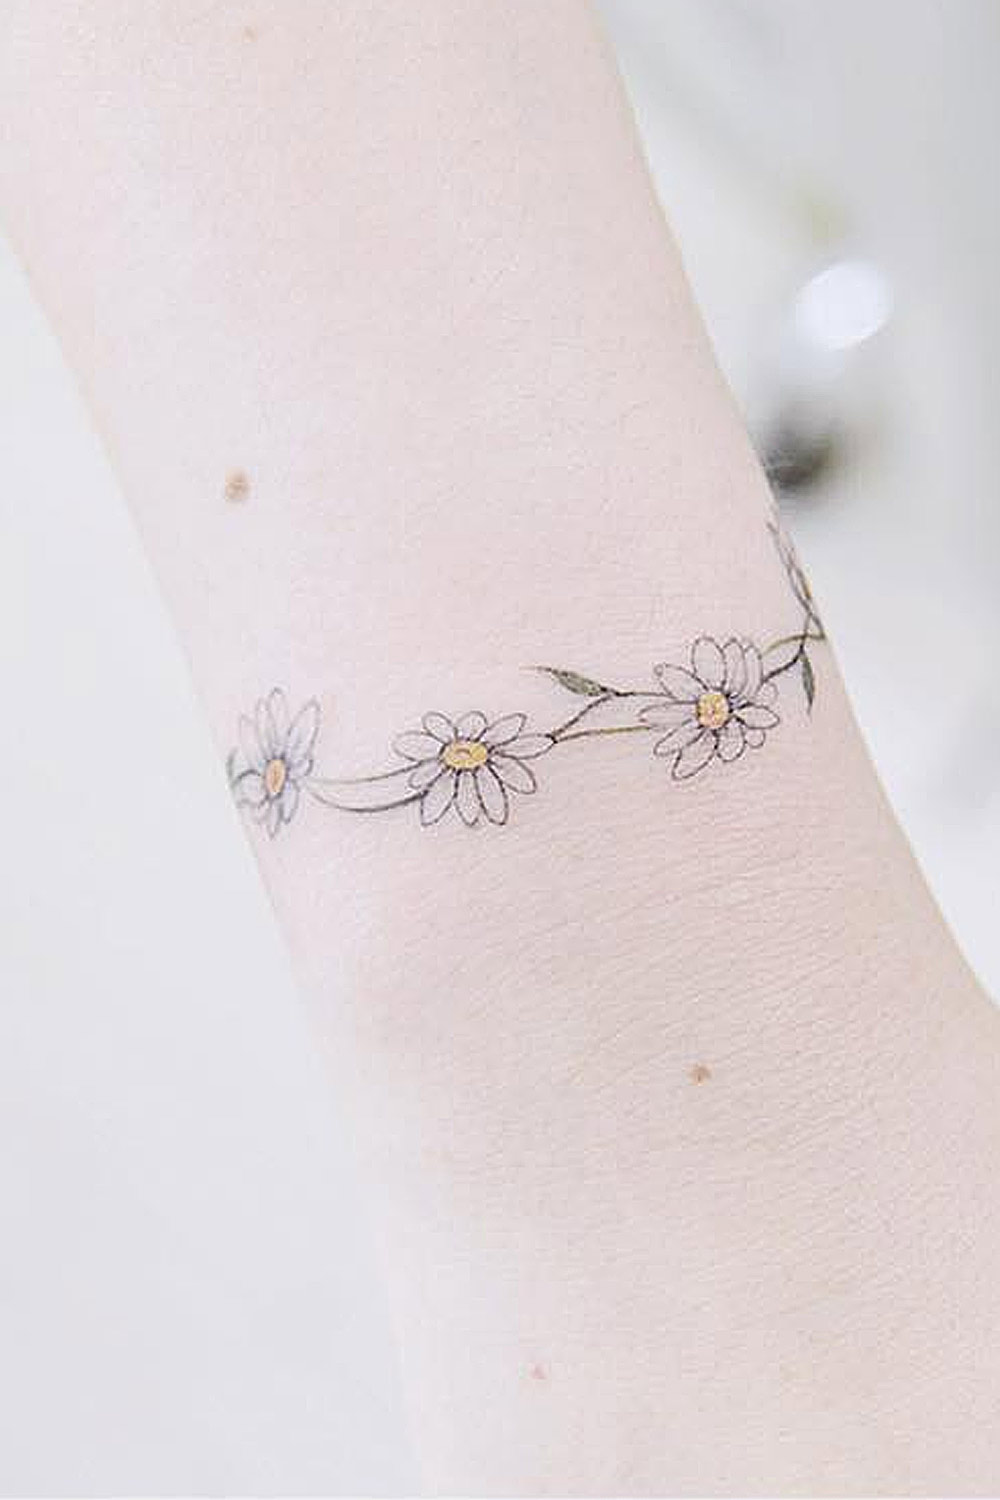 Wrist Daisy Chain Tattoo